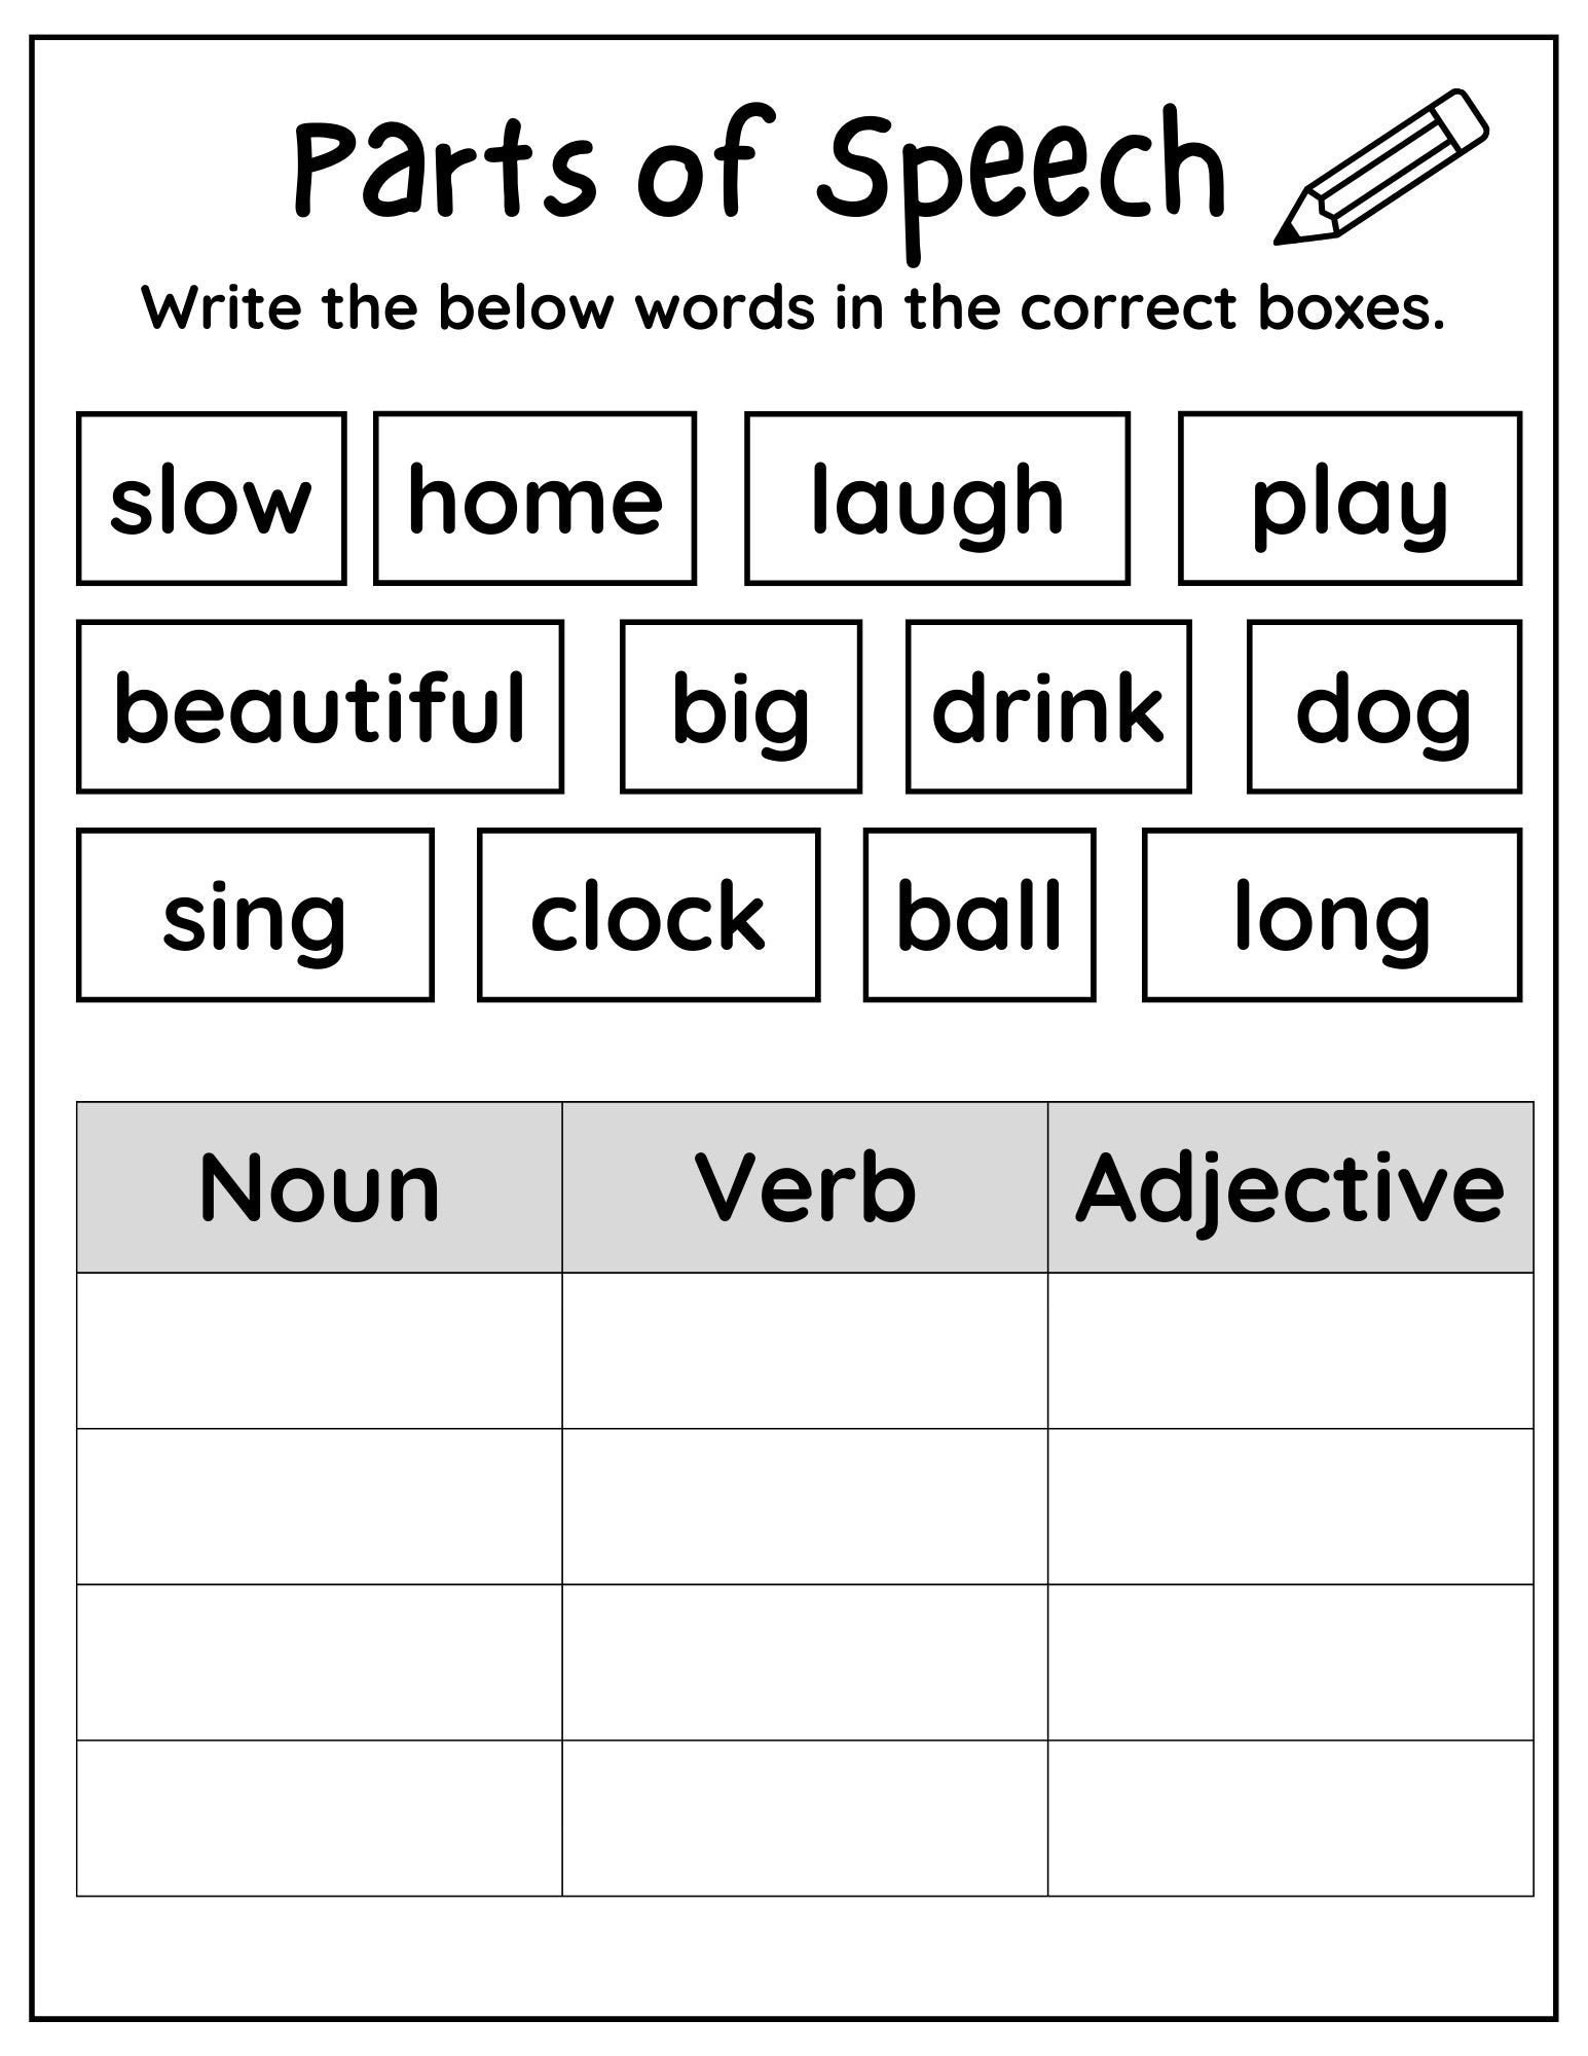 10-printable-parts-of-speech-worksheets-printable-noun-verb-adjective